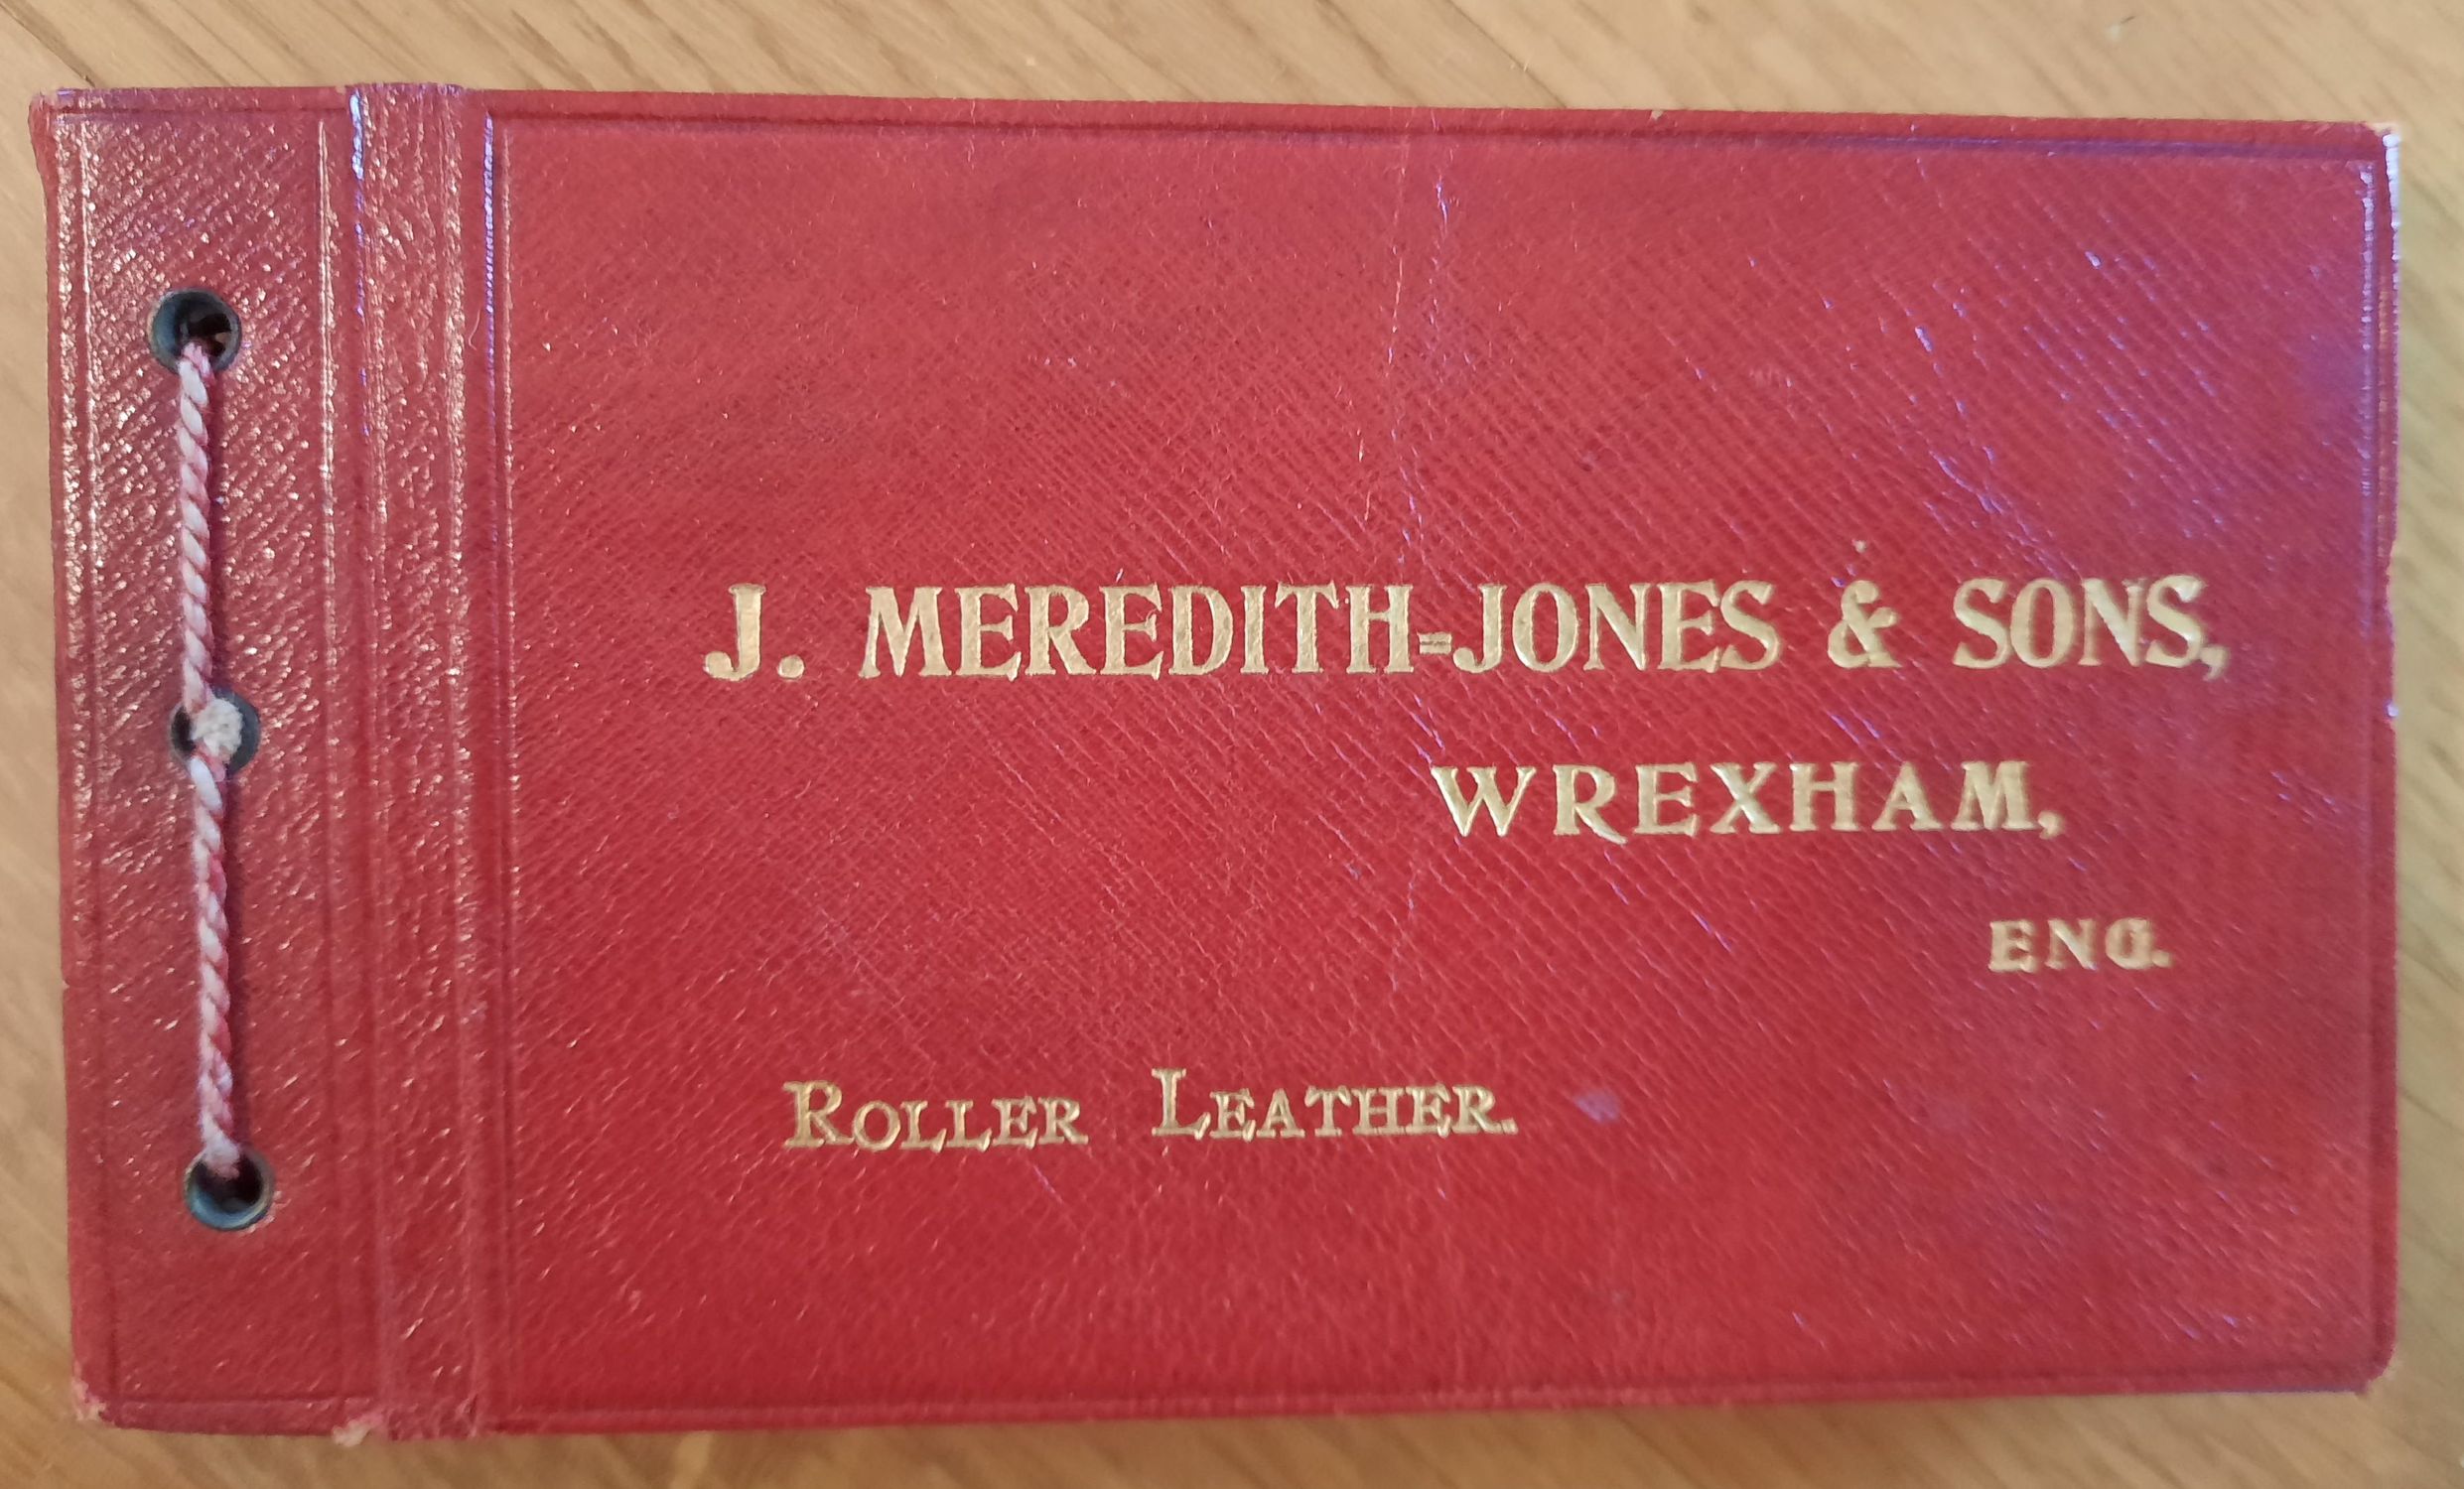  - Musterkatalog der englischen Lederfirma J. Meredith-Jones & Sons..